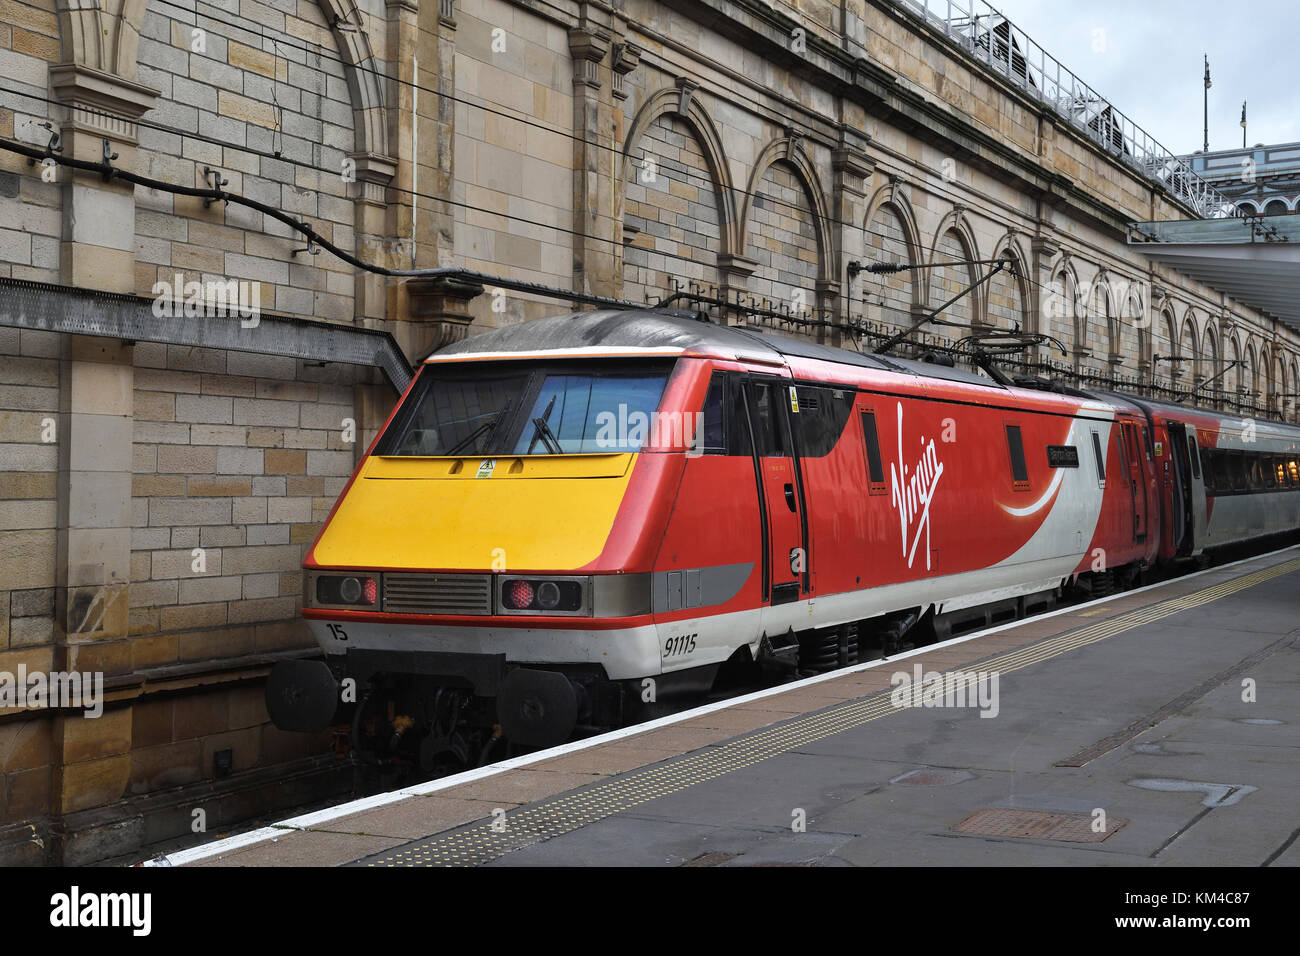 virgin trains;class 91 electric;91115;edinburgh waverley;scotland Stock Photo